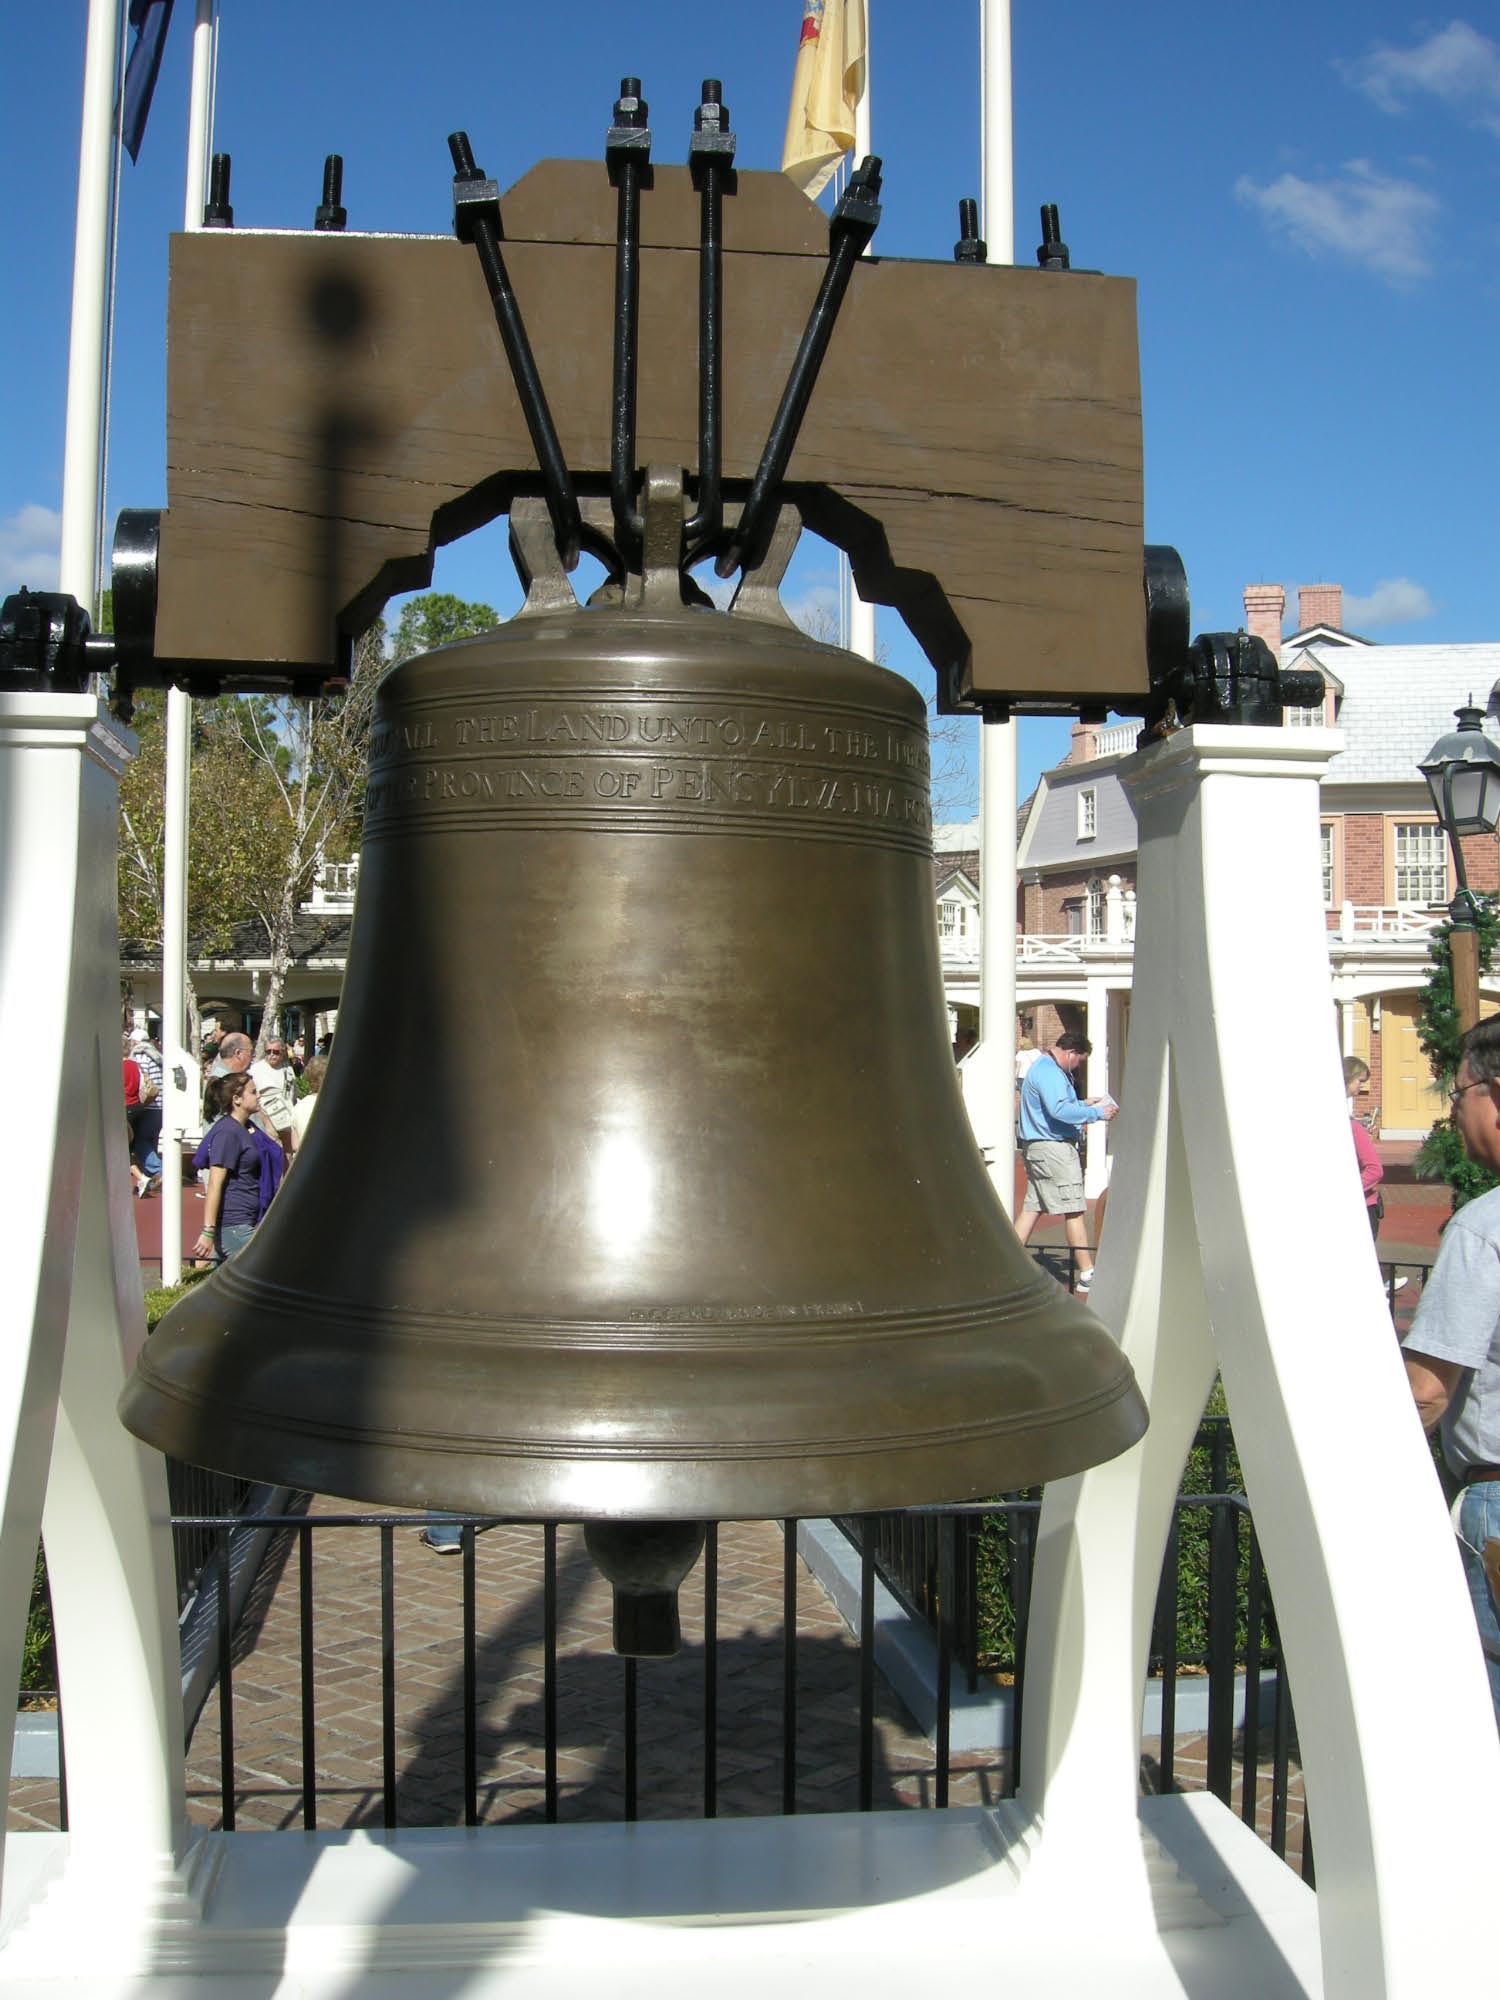 Magic Kingdom - Liberty Square - The Liberty Bell